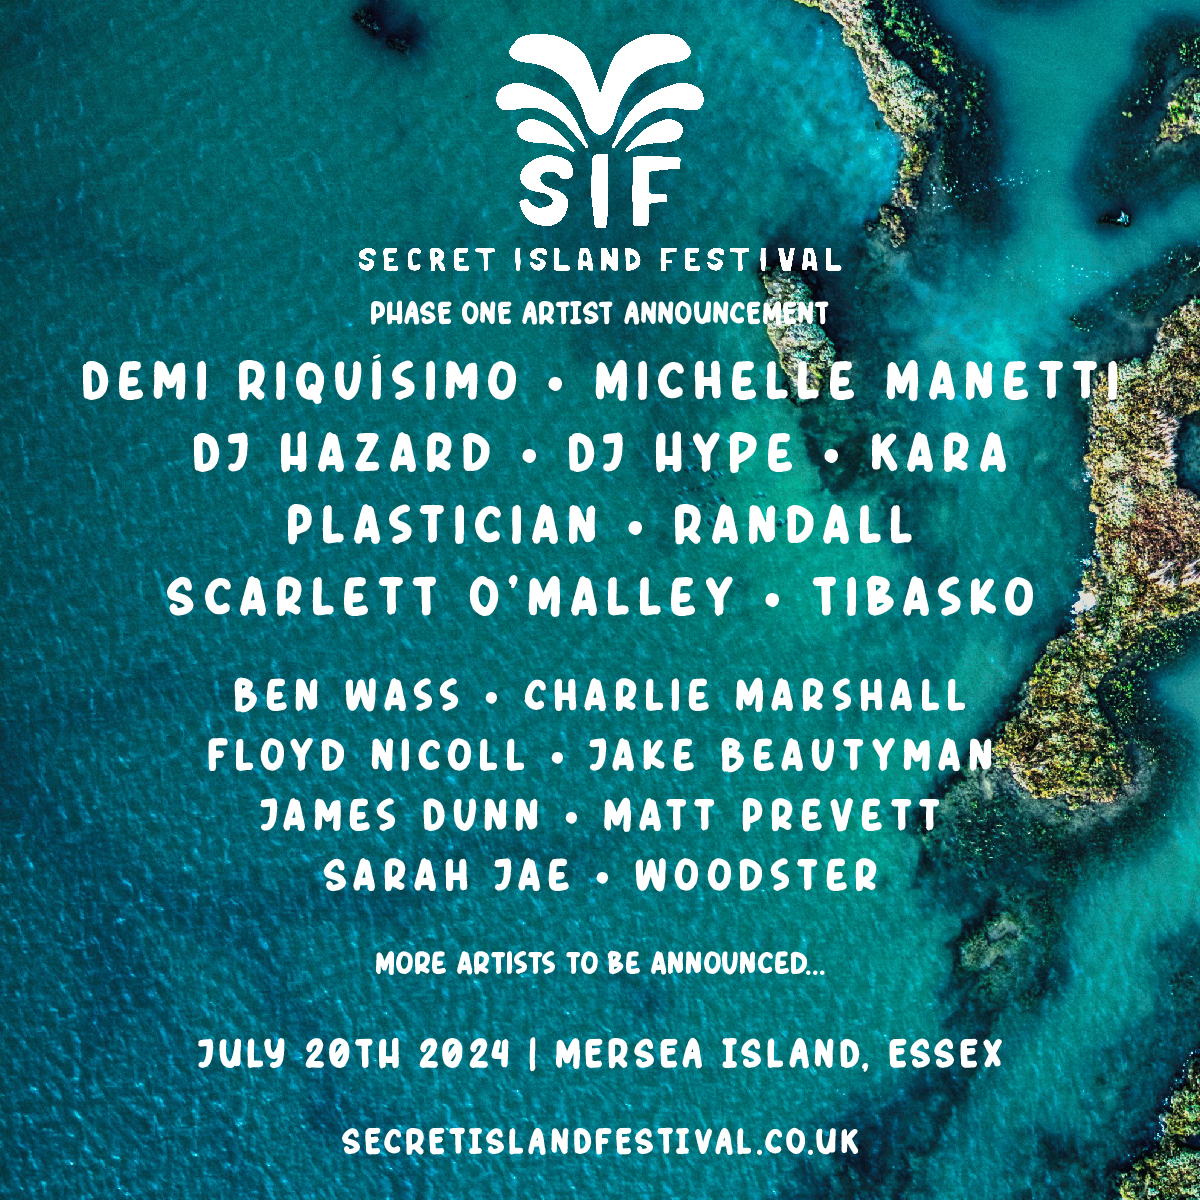 Secret island Festival 2024 Mersea Island